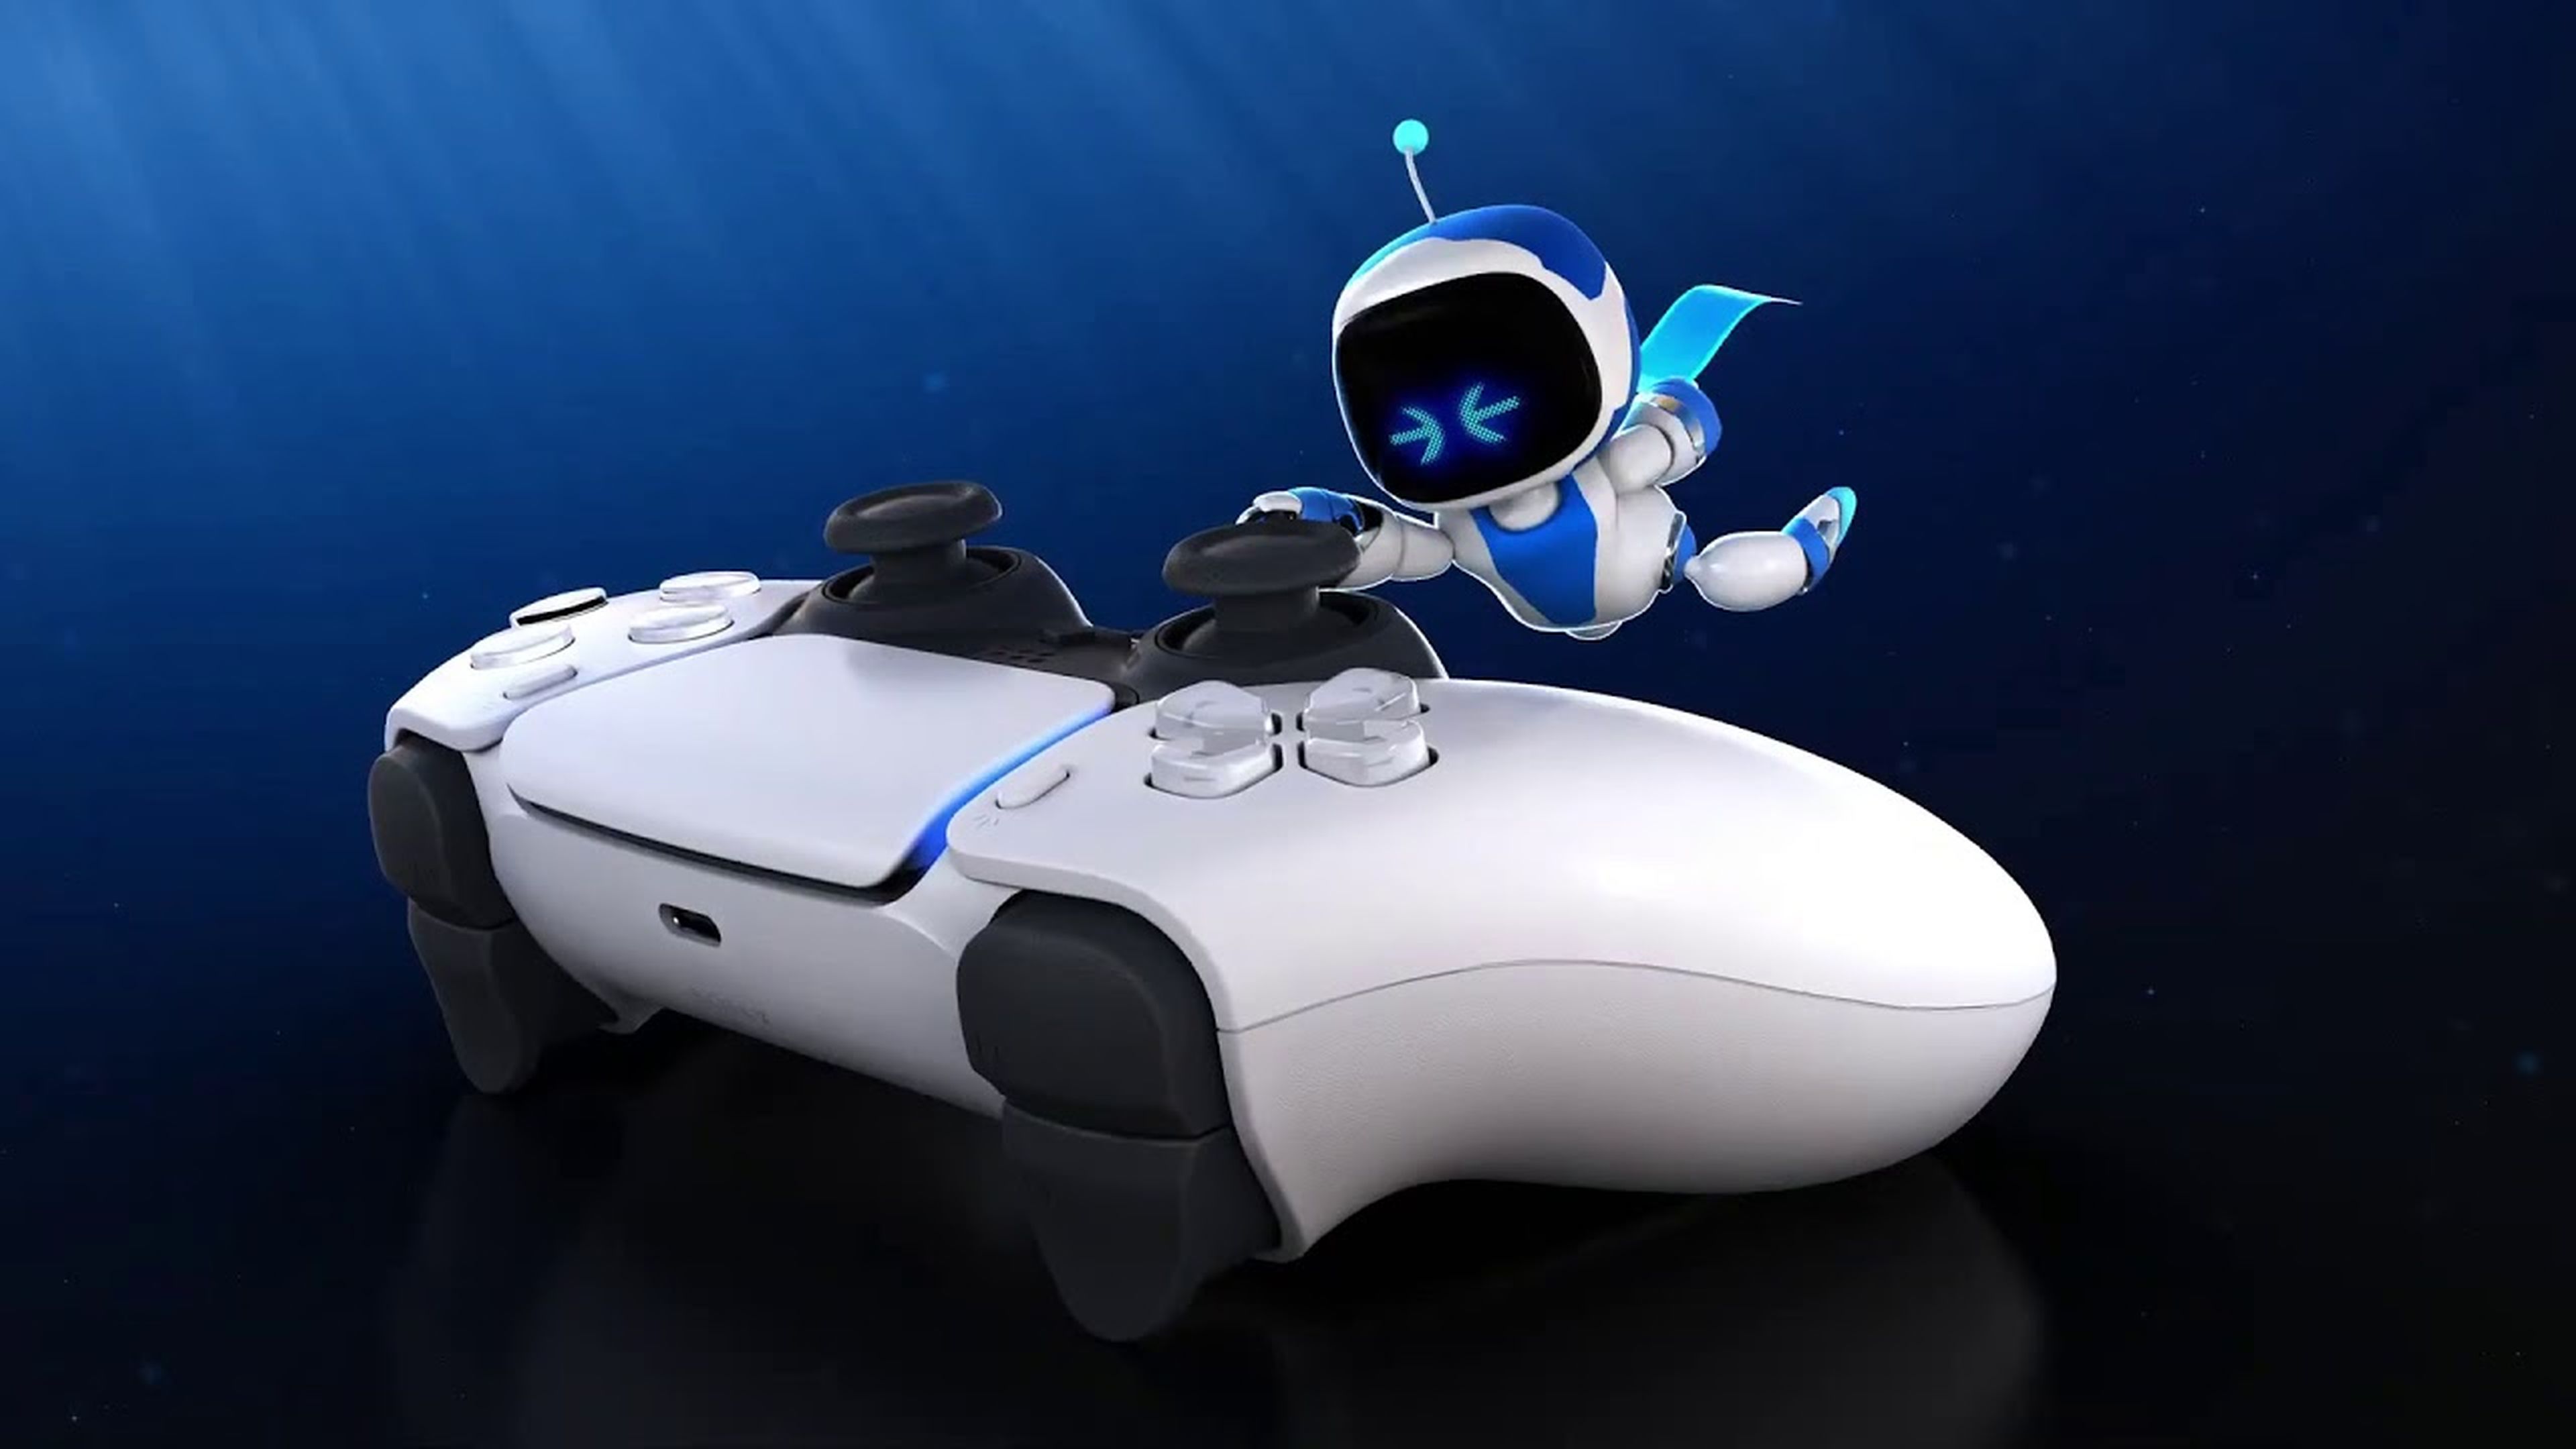 Playstation 5 Digital Mate Amarillo - X Controllers - Mandos